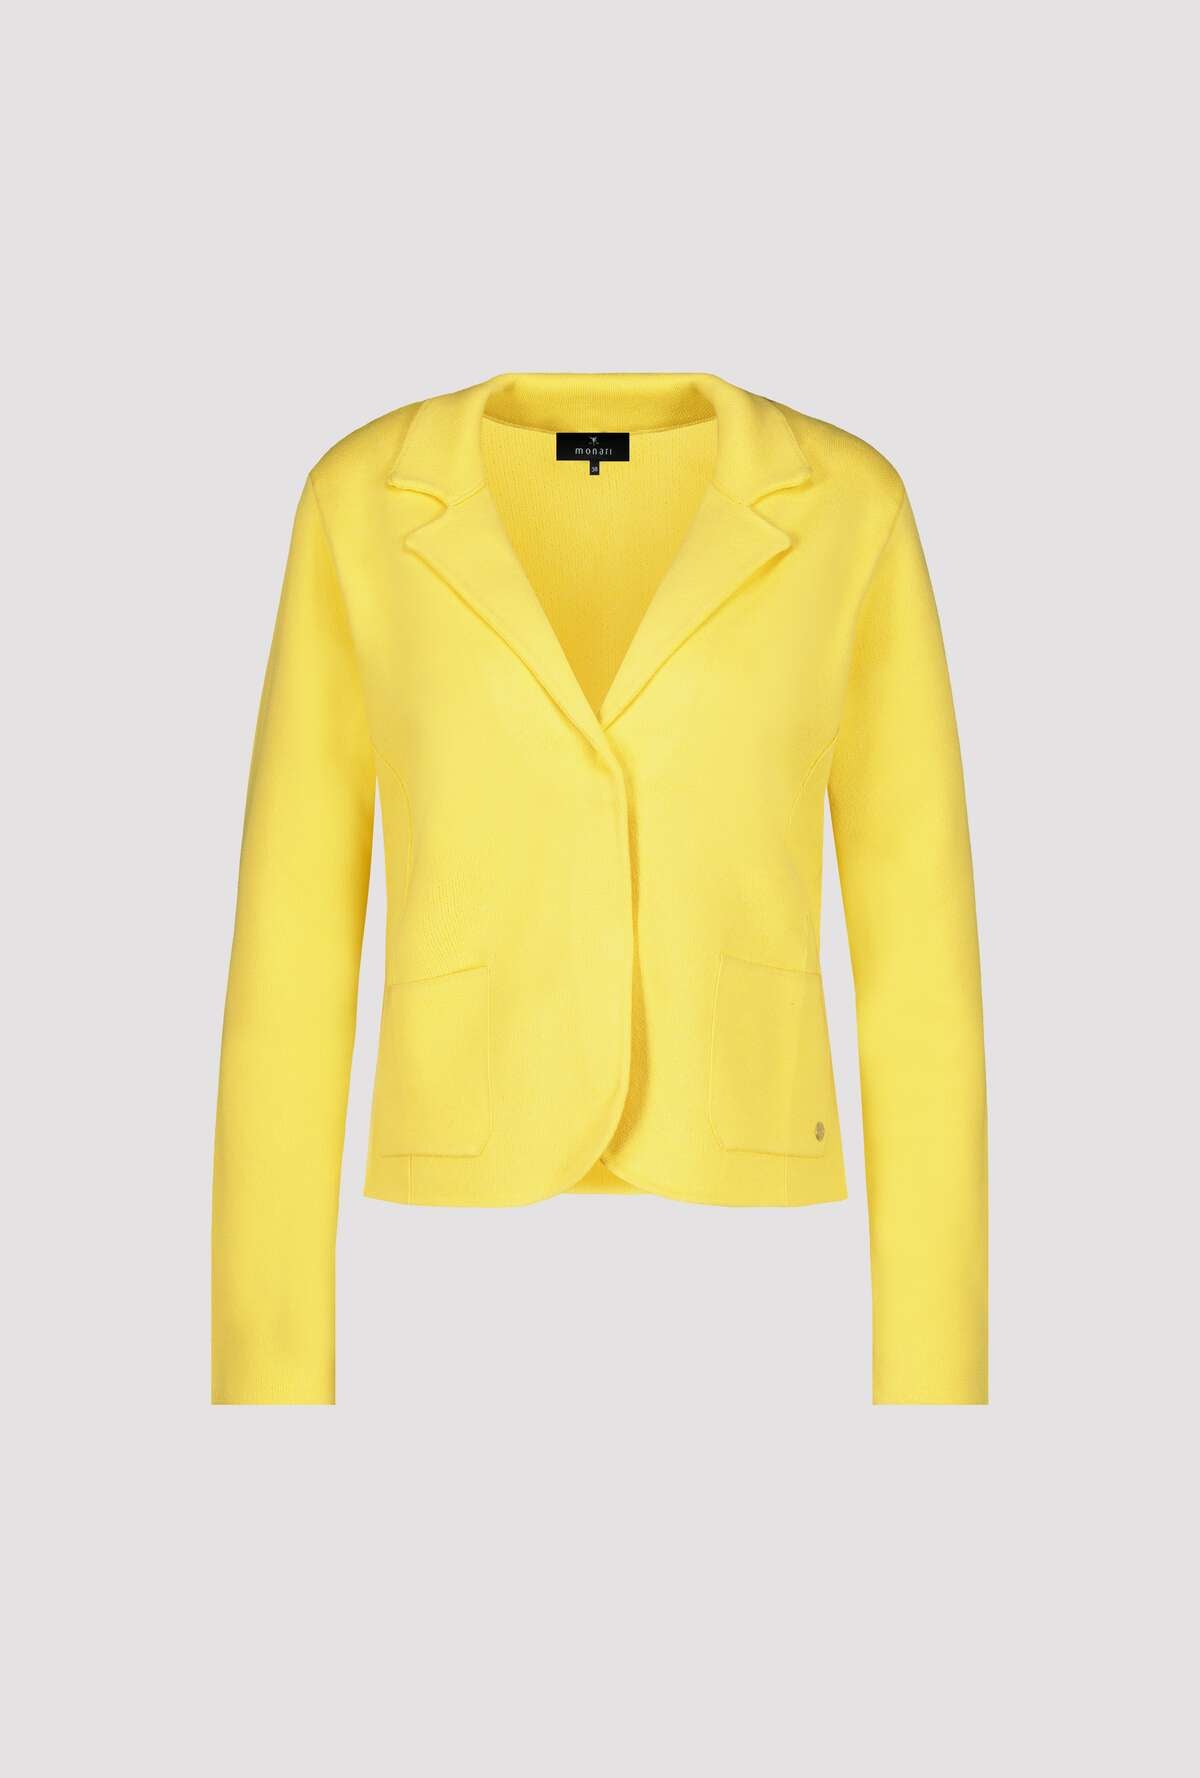 Sunshine Yellow Cotton Blazer 408485